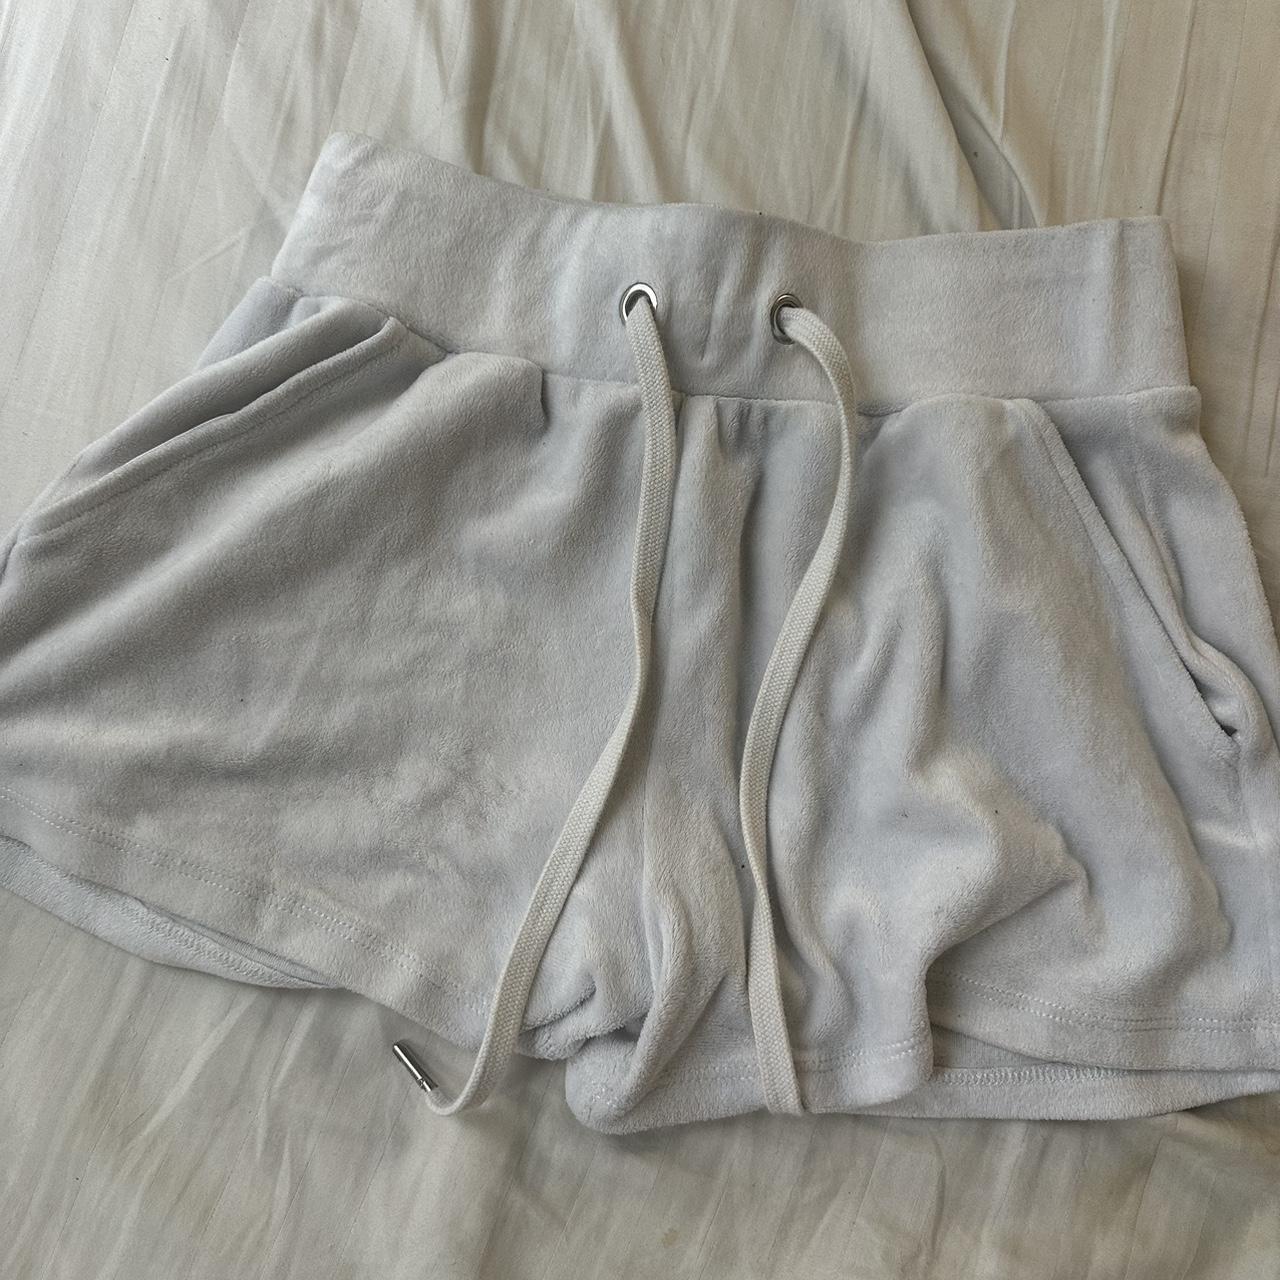 white velour shorts ⭐️ - perfect comfy loungewear -... - Depop